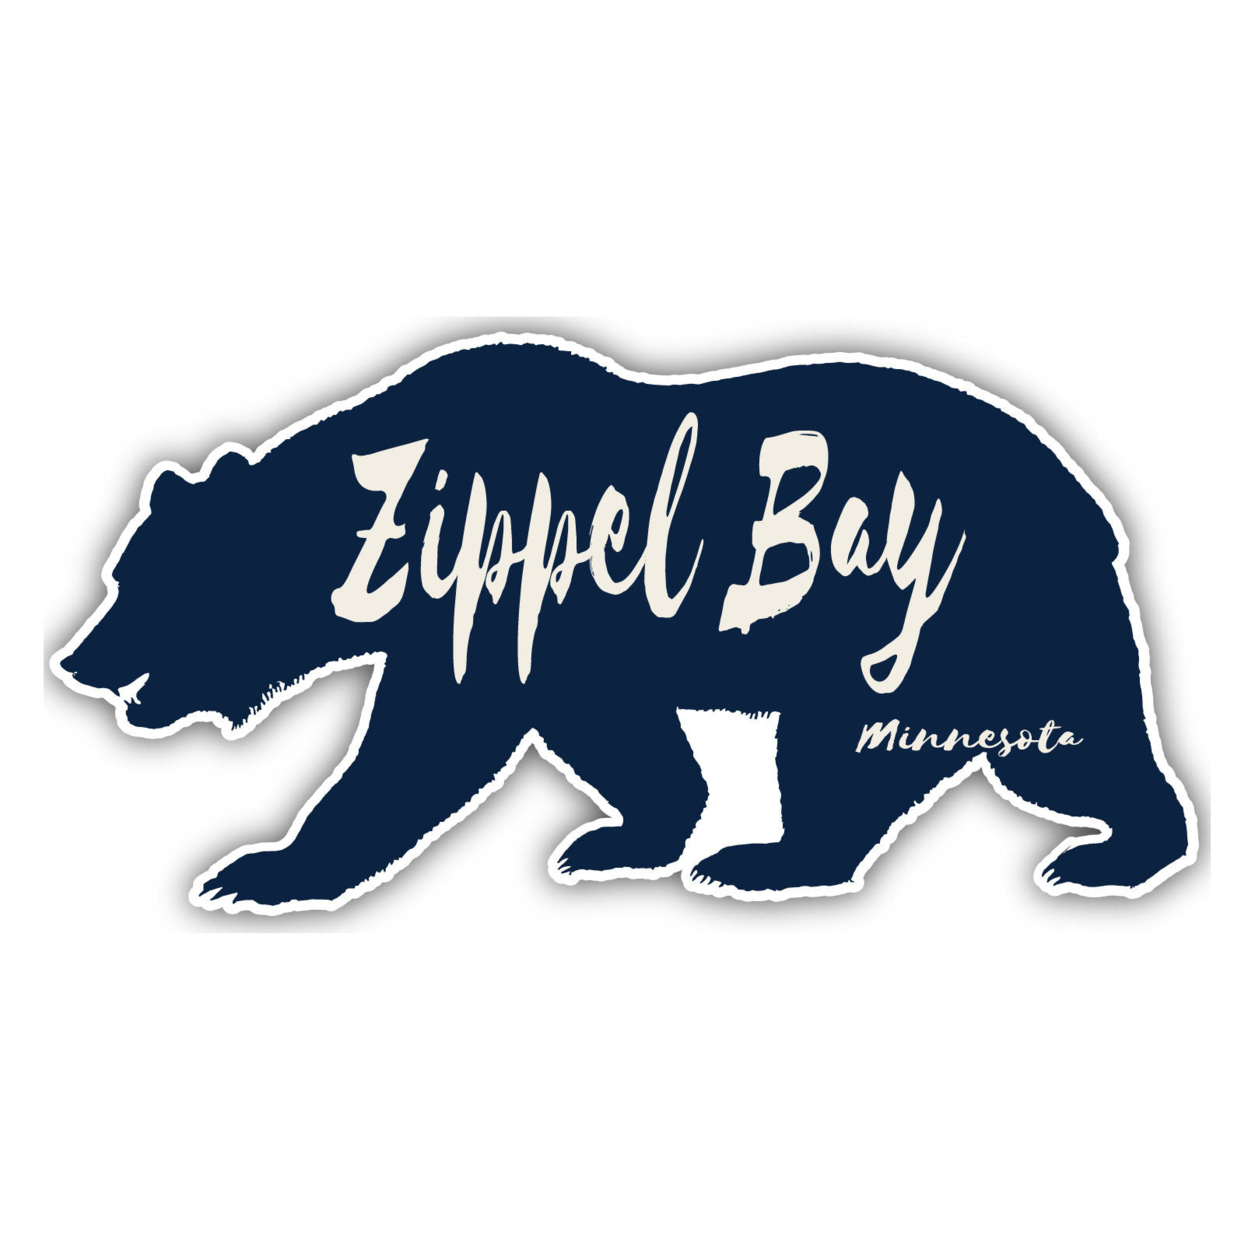 Zippel Bay Minnesota Souvenir Decorative Stickers (Choose Theme And Size) - Single Unit, 4-Inch, Bear